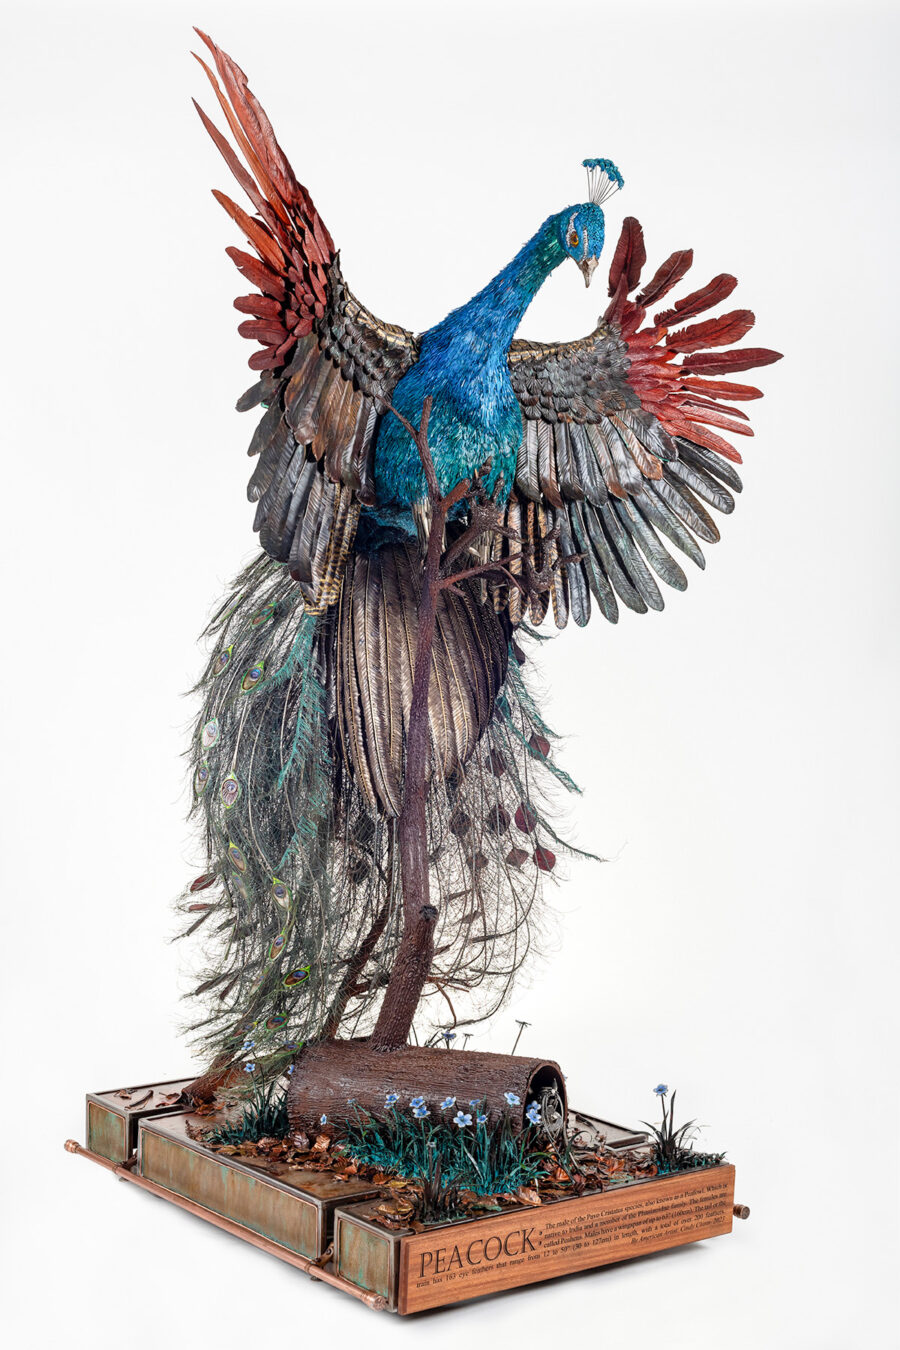 Peacock Sculpture by Cindy Chinn - 9